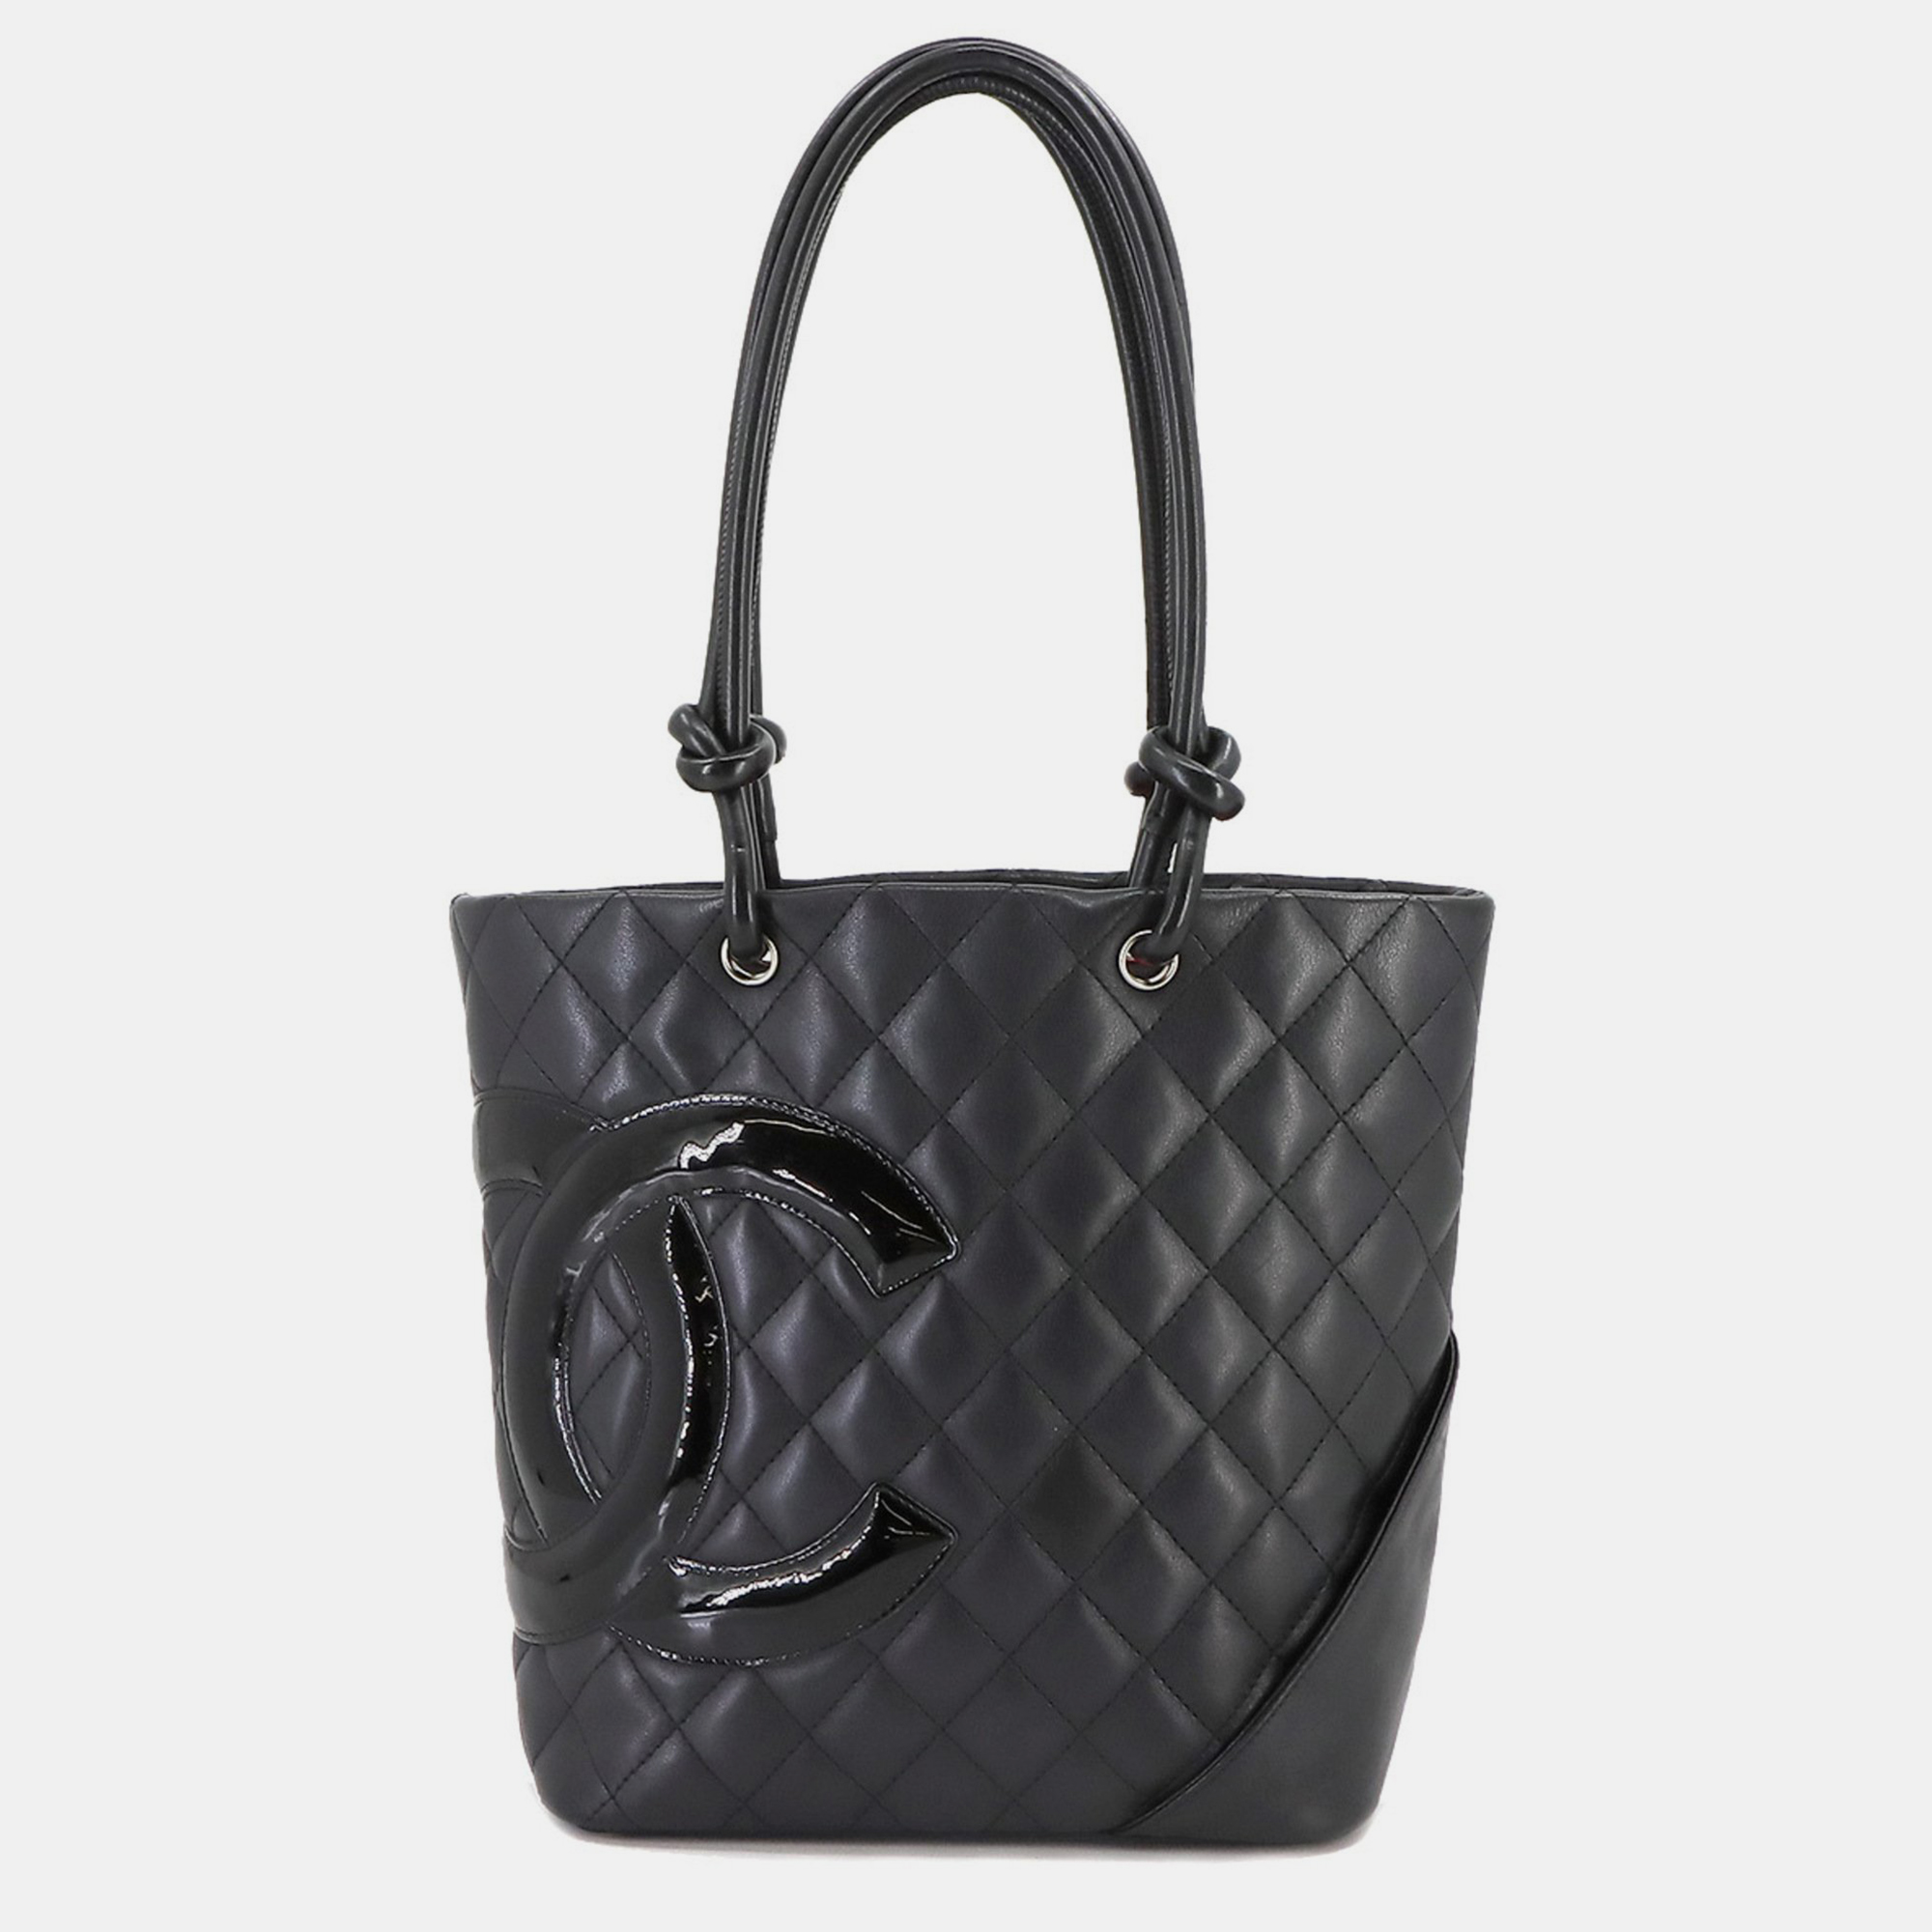 Chanel black leather medium cambon ligne totes